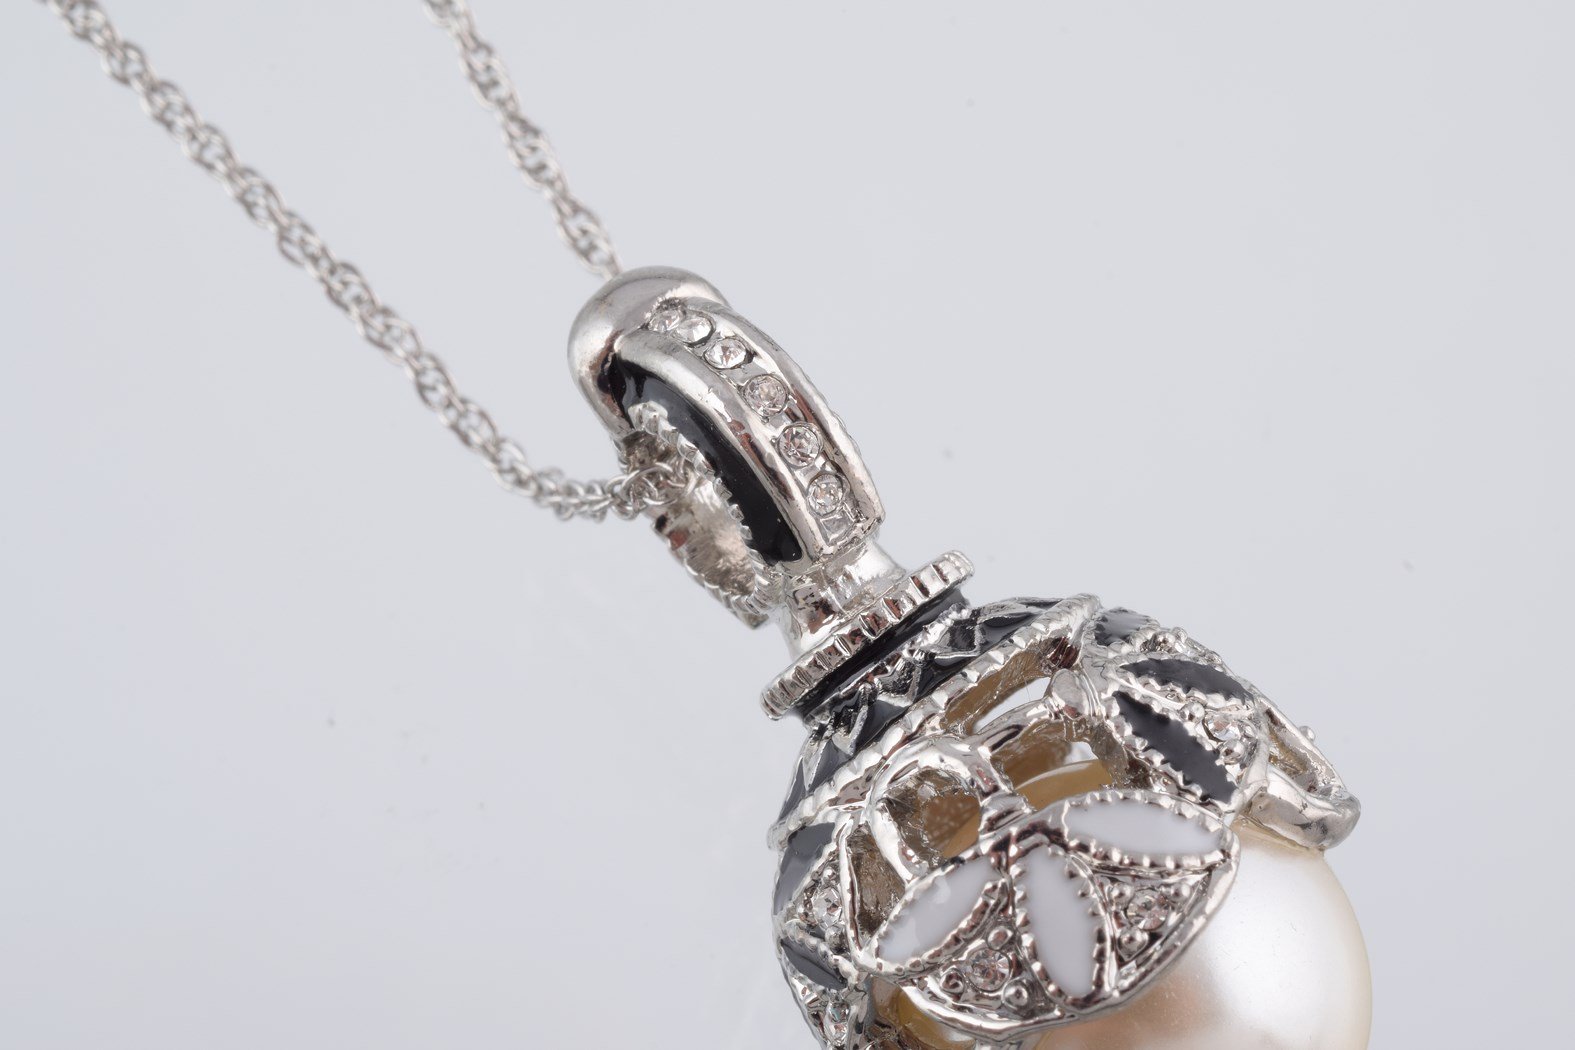 Keren Kopal Silver & Black Pearl Egg Pendant Necklace  39.00